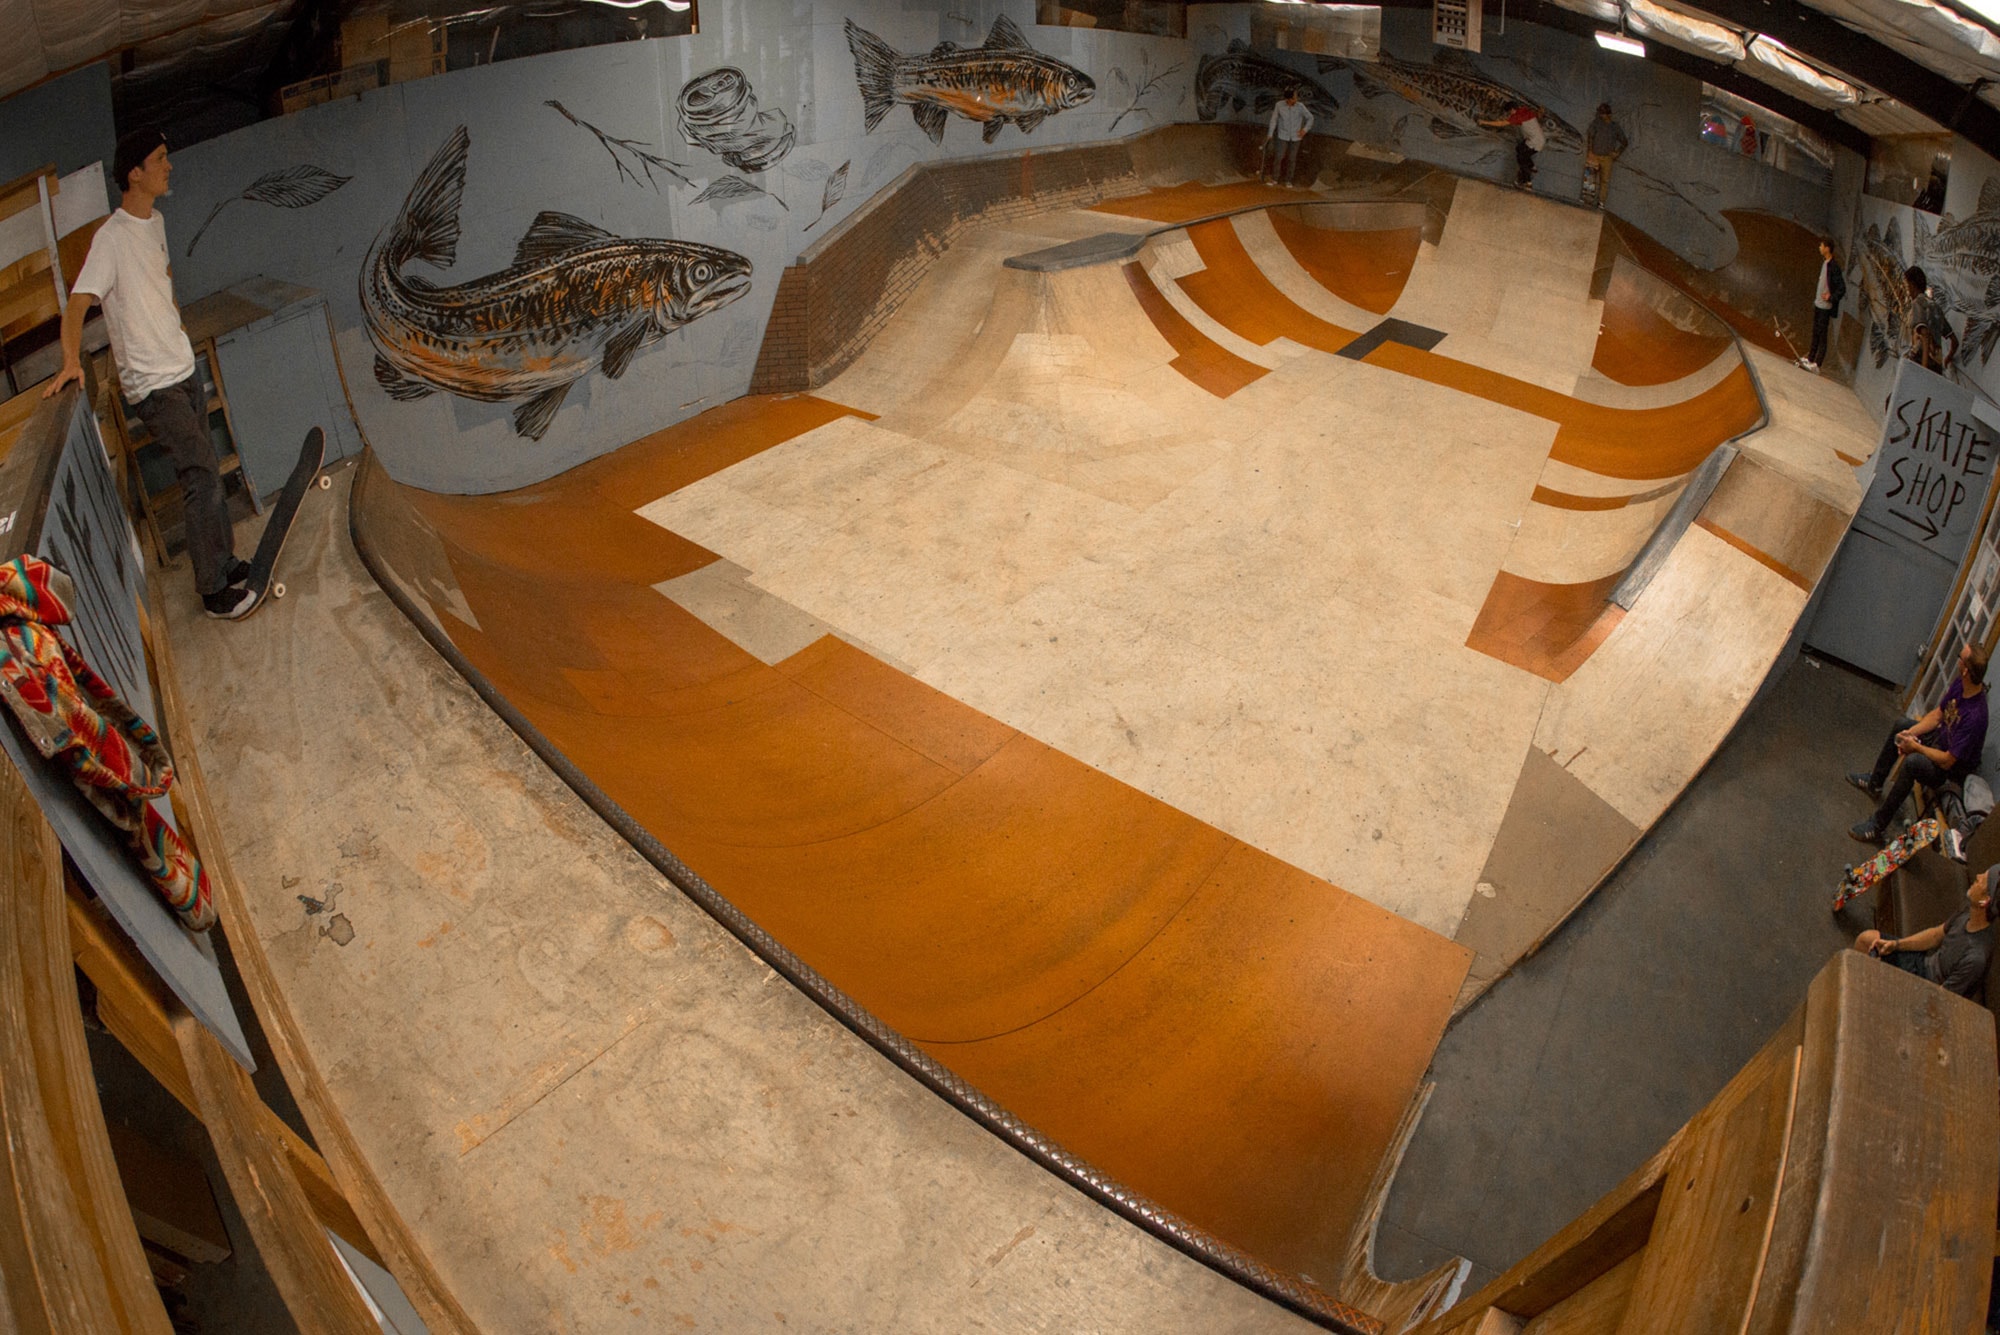 Levis Skateboarding Proof Lab Gallery